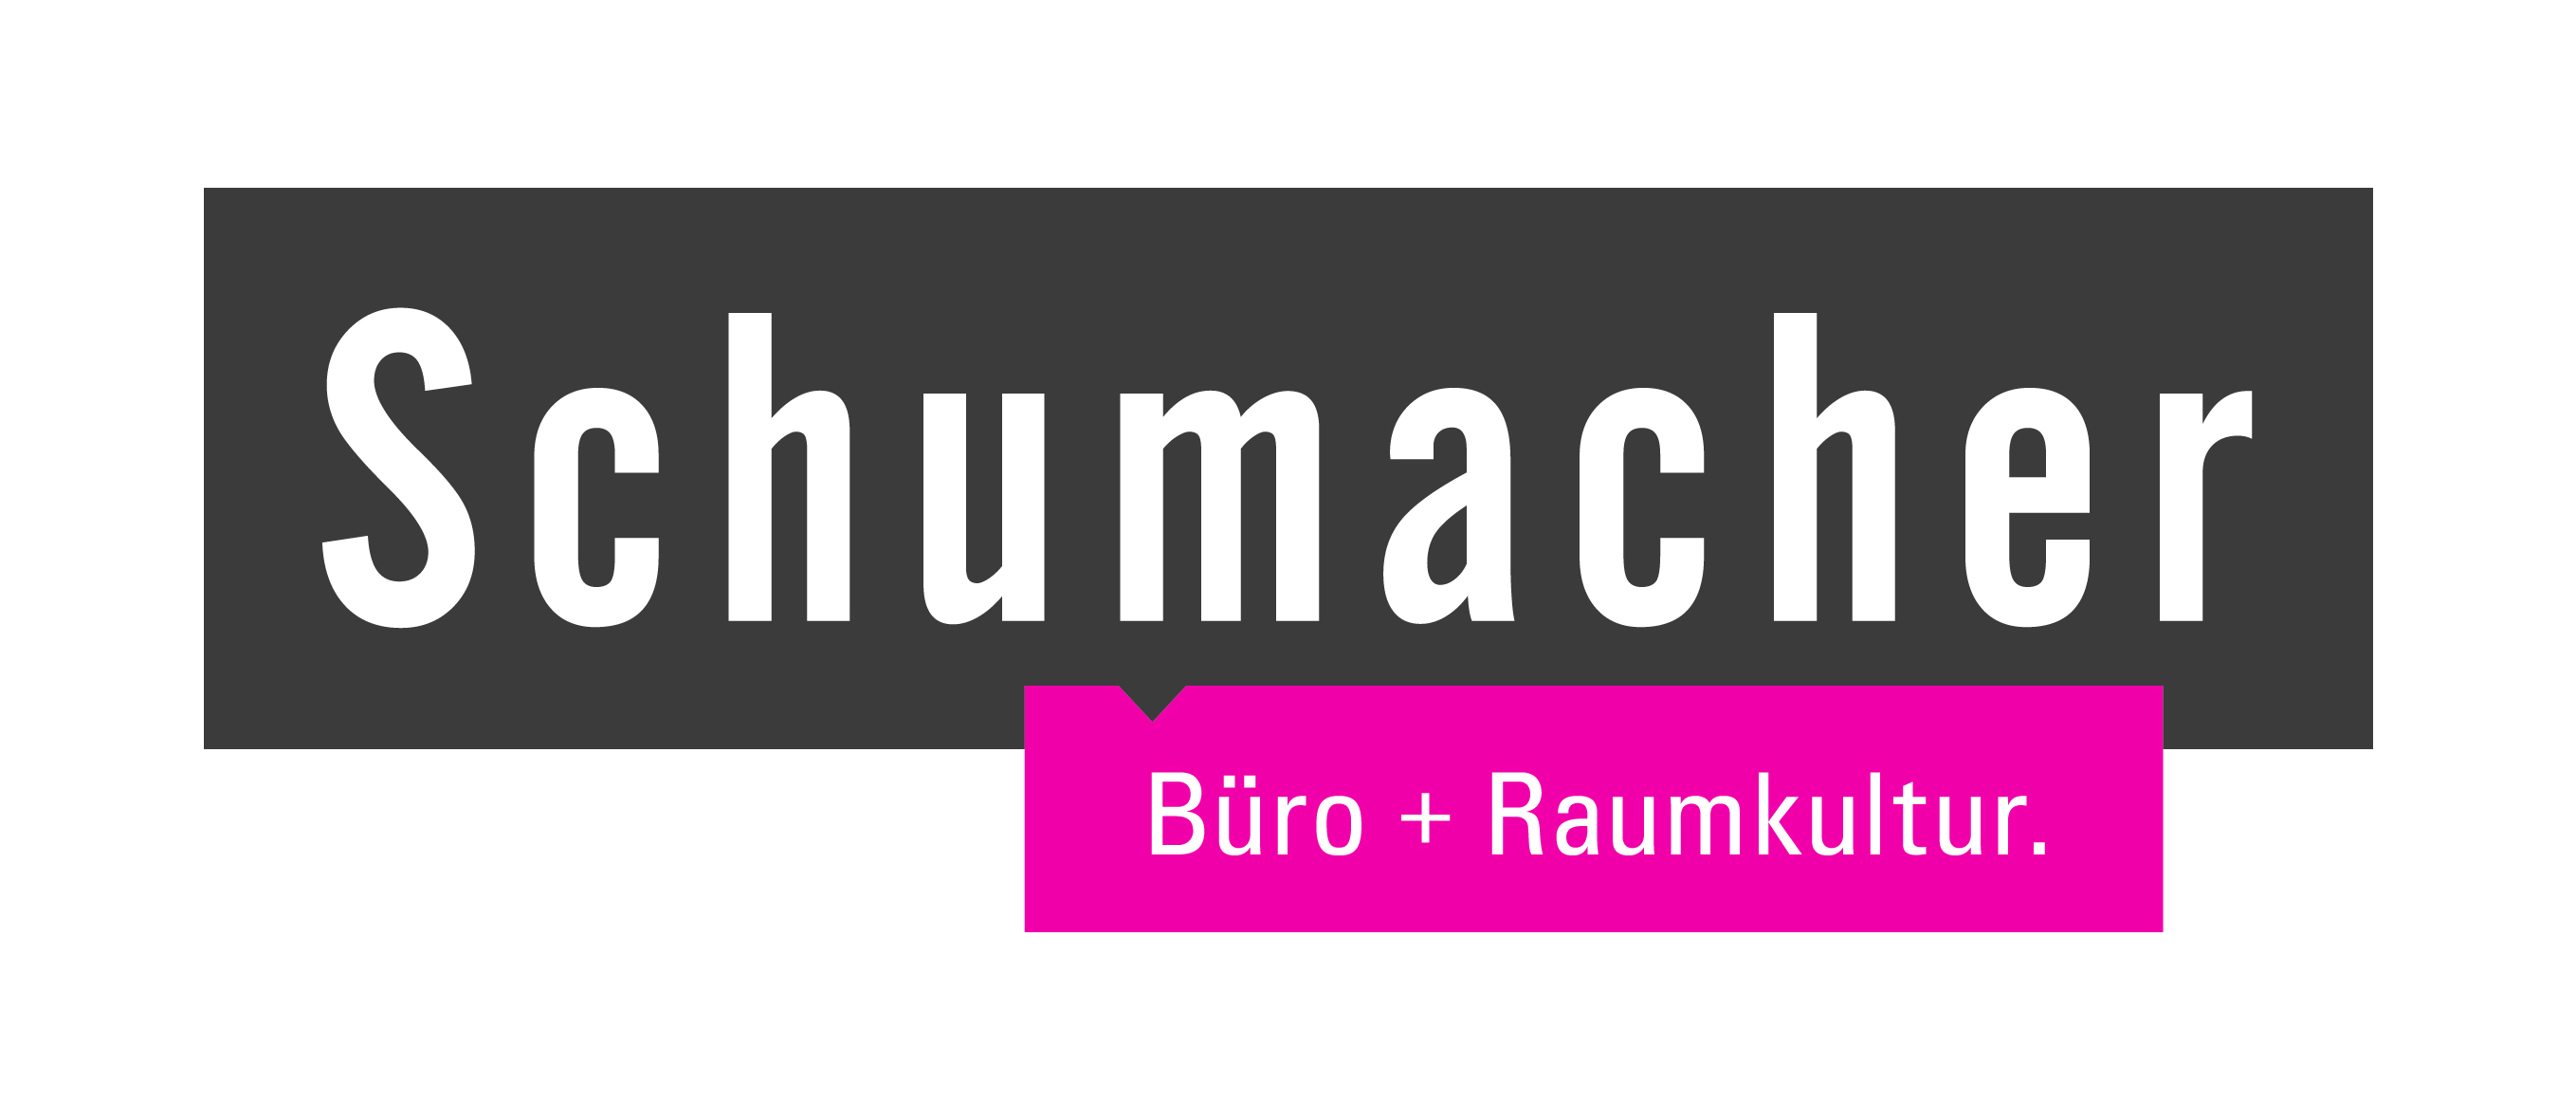 Schumacher Büro + Raumkultur.